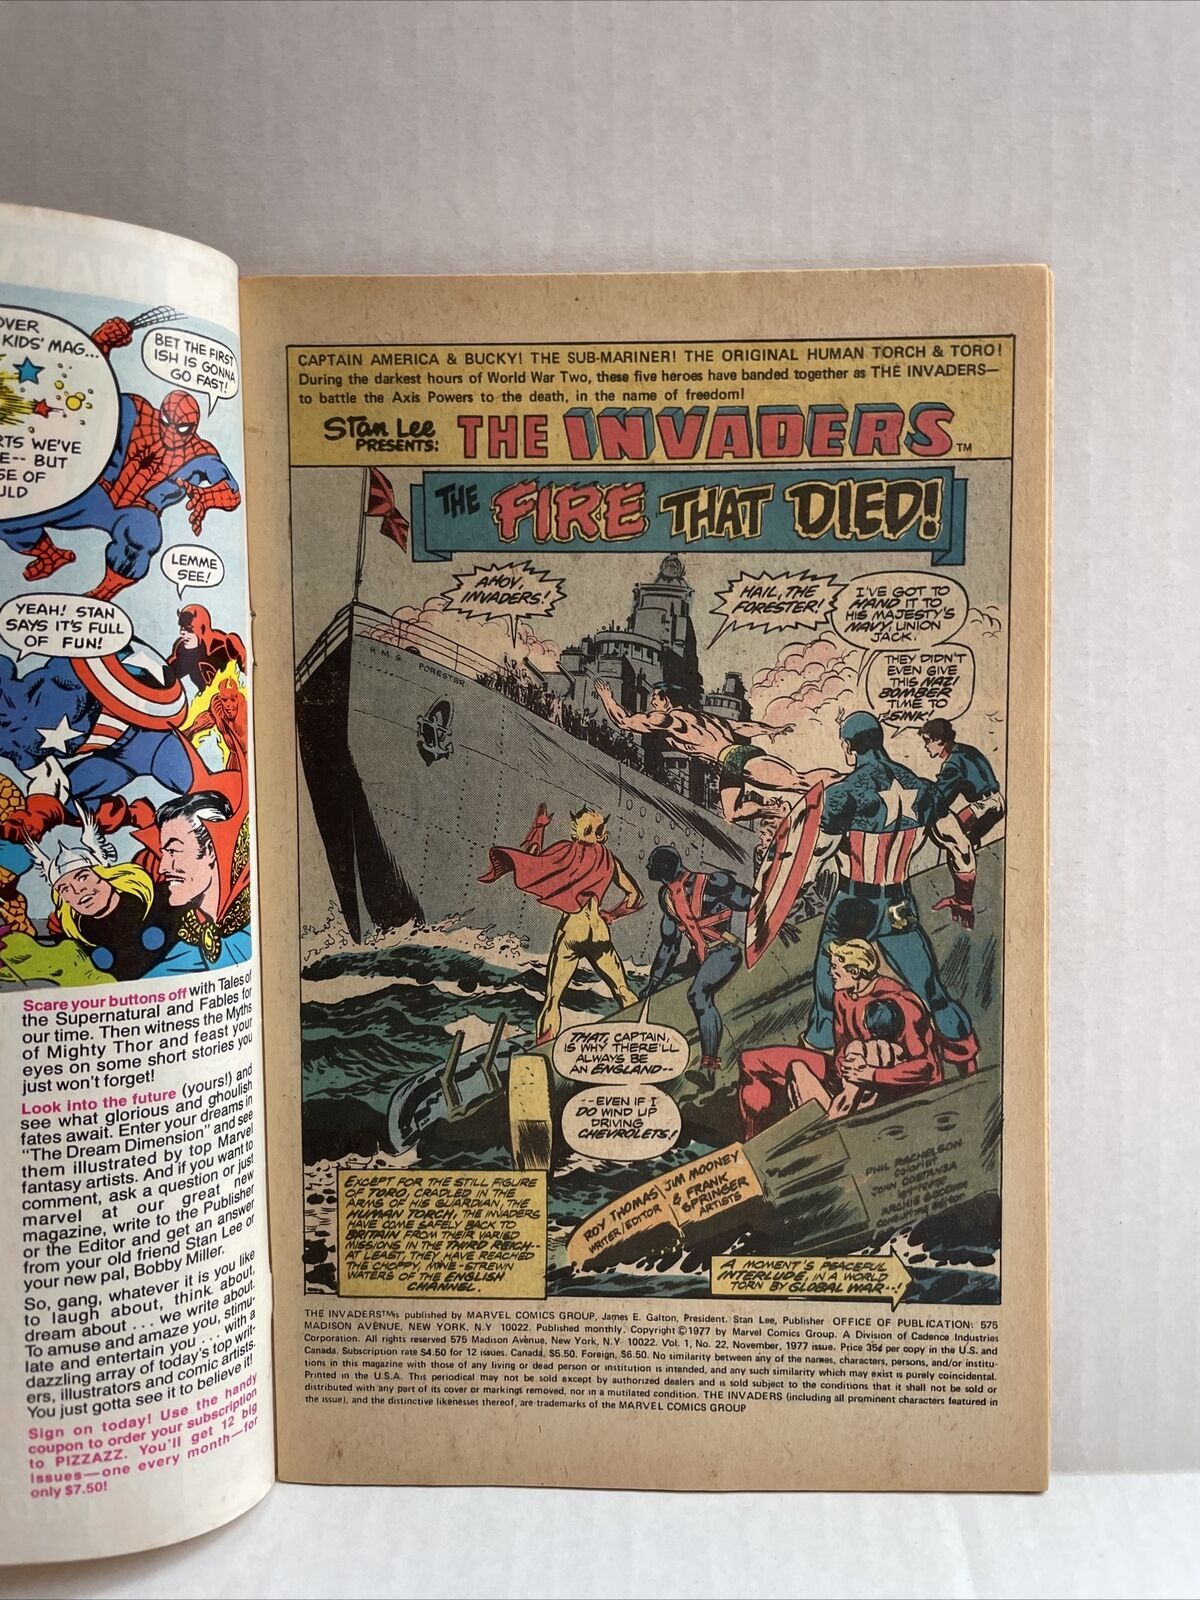 Invaders #8 NM- 9.2 1st Union Jack Cover, a Beautiful Classic Marvel Comics  c187 | Comic Books - Bronze Age, Marvel, Invaders, Superhero